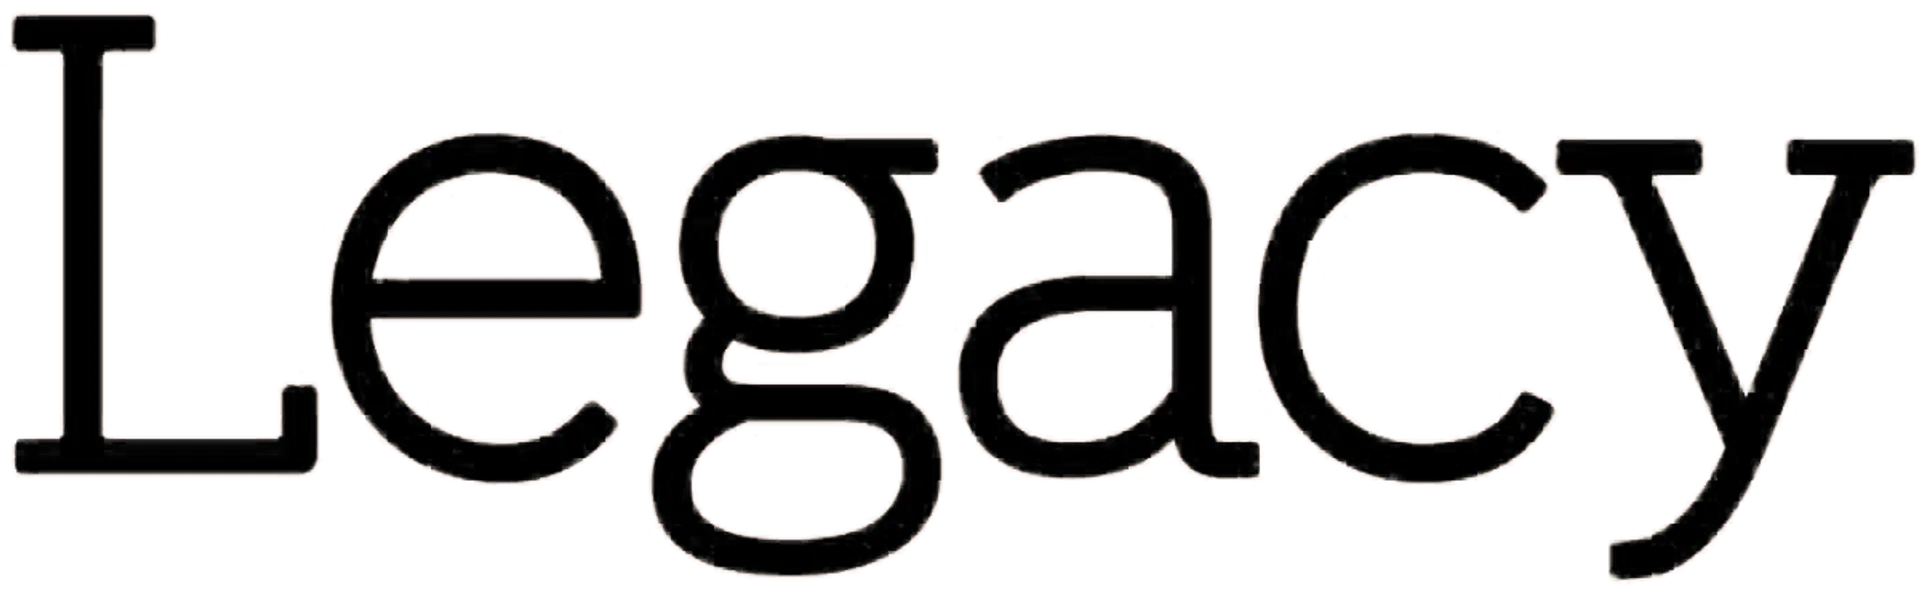 LEGACY logo de catálogo